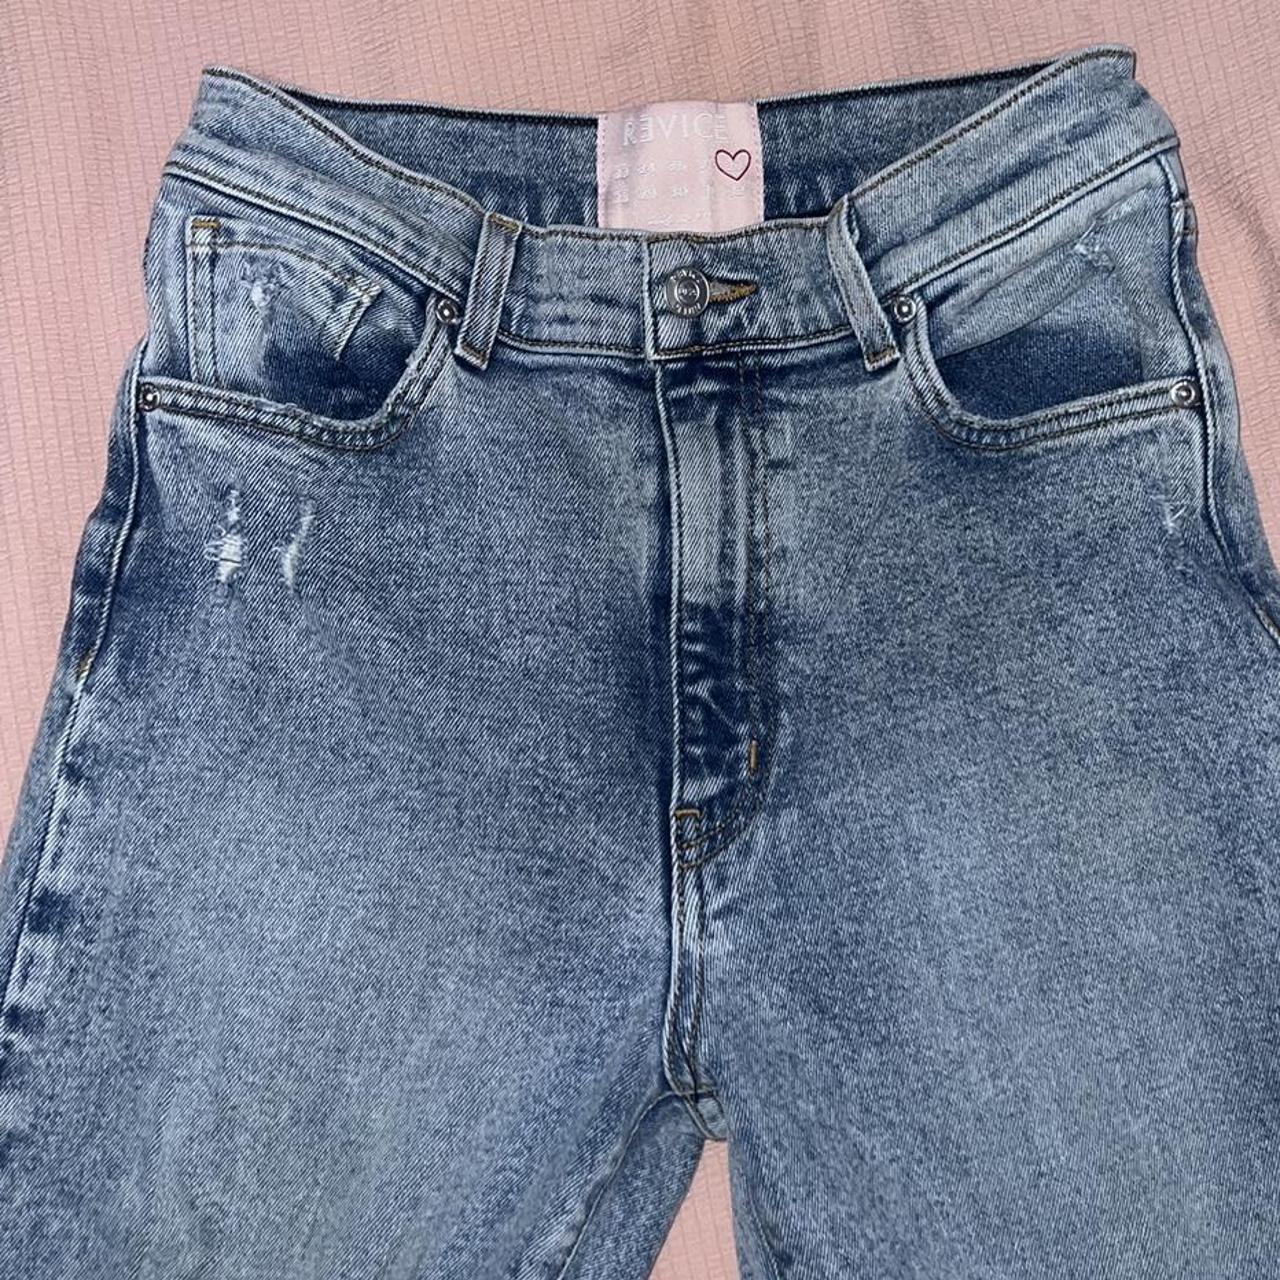 Revice Denim jeans 💗 star jeans 💗 size 27 💗 rips... - Depop